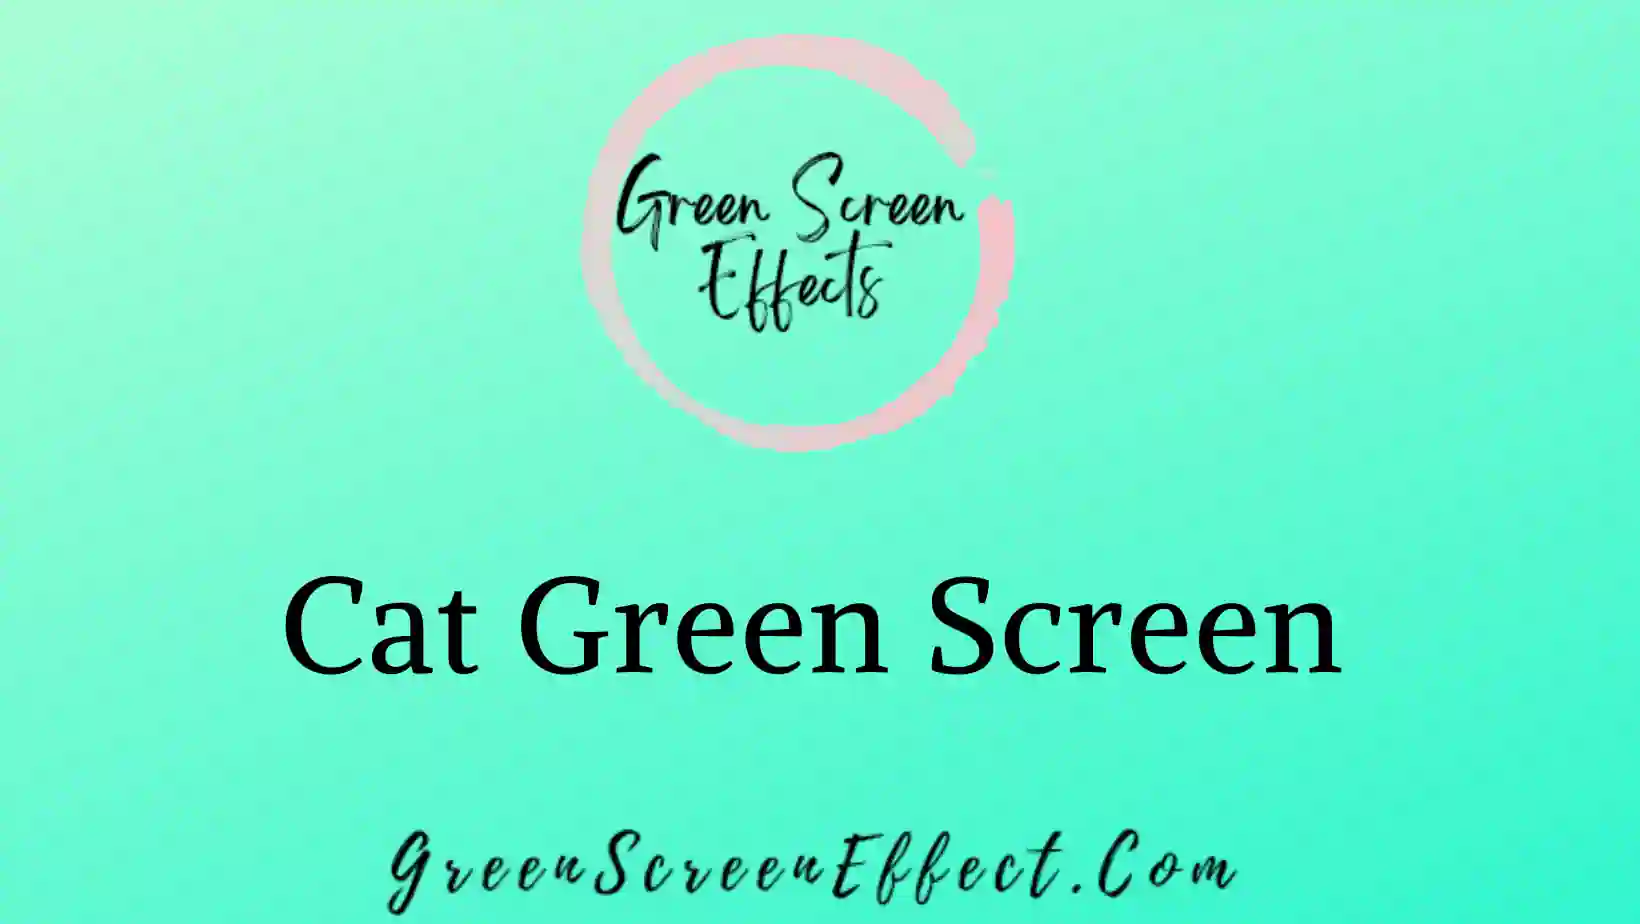 Cat Green Screen